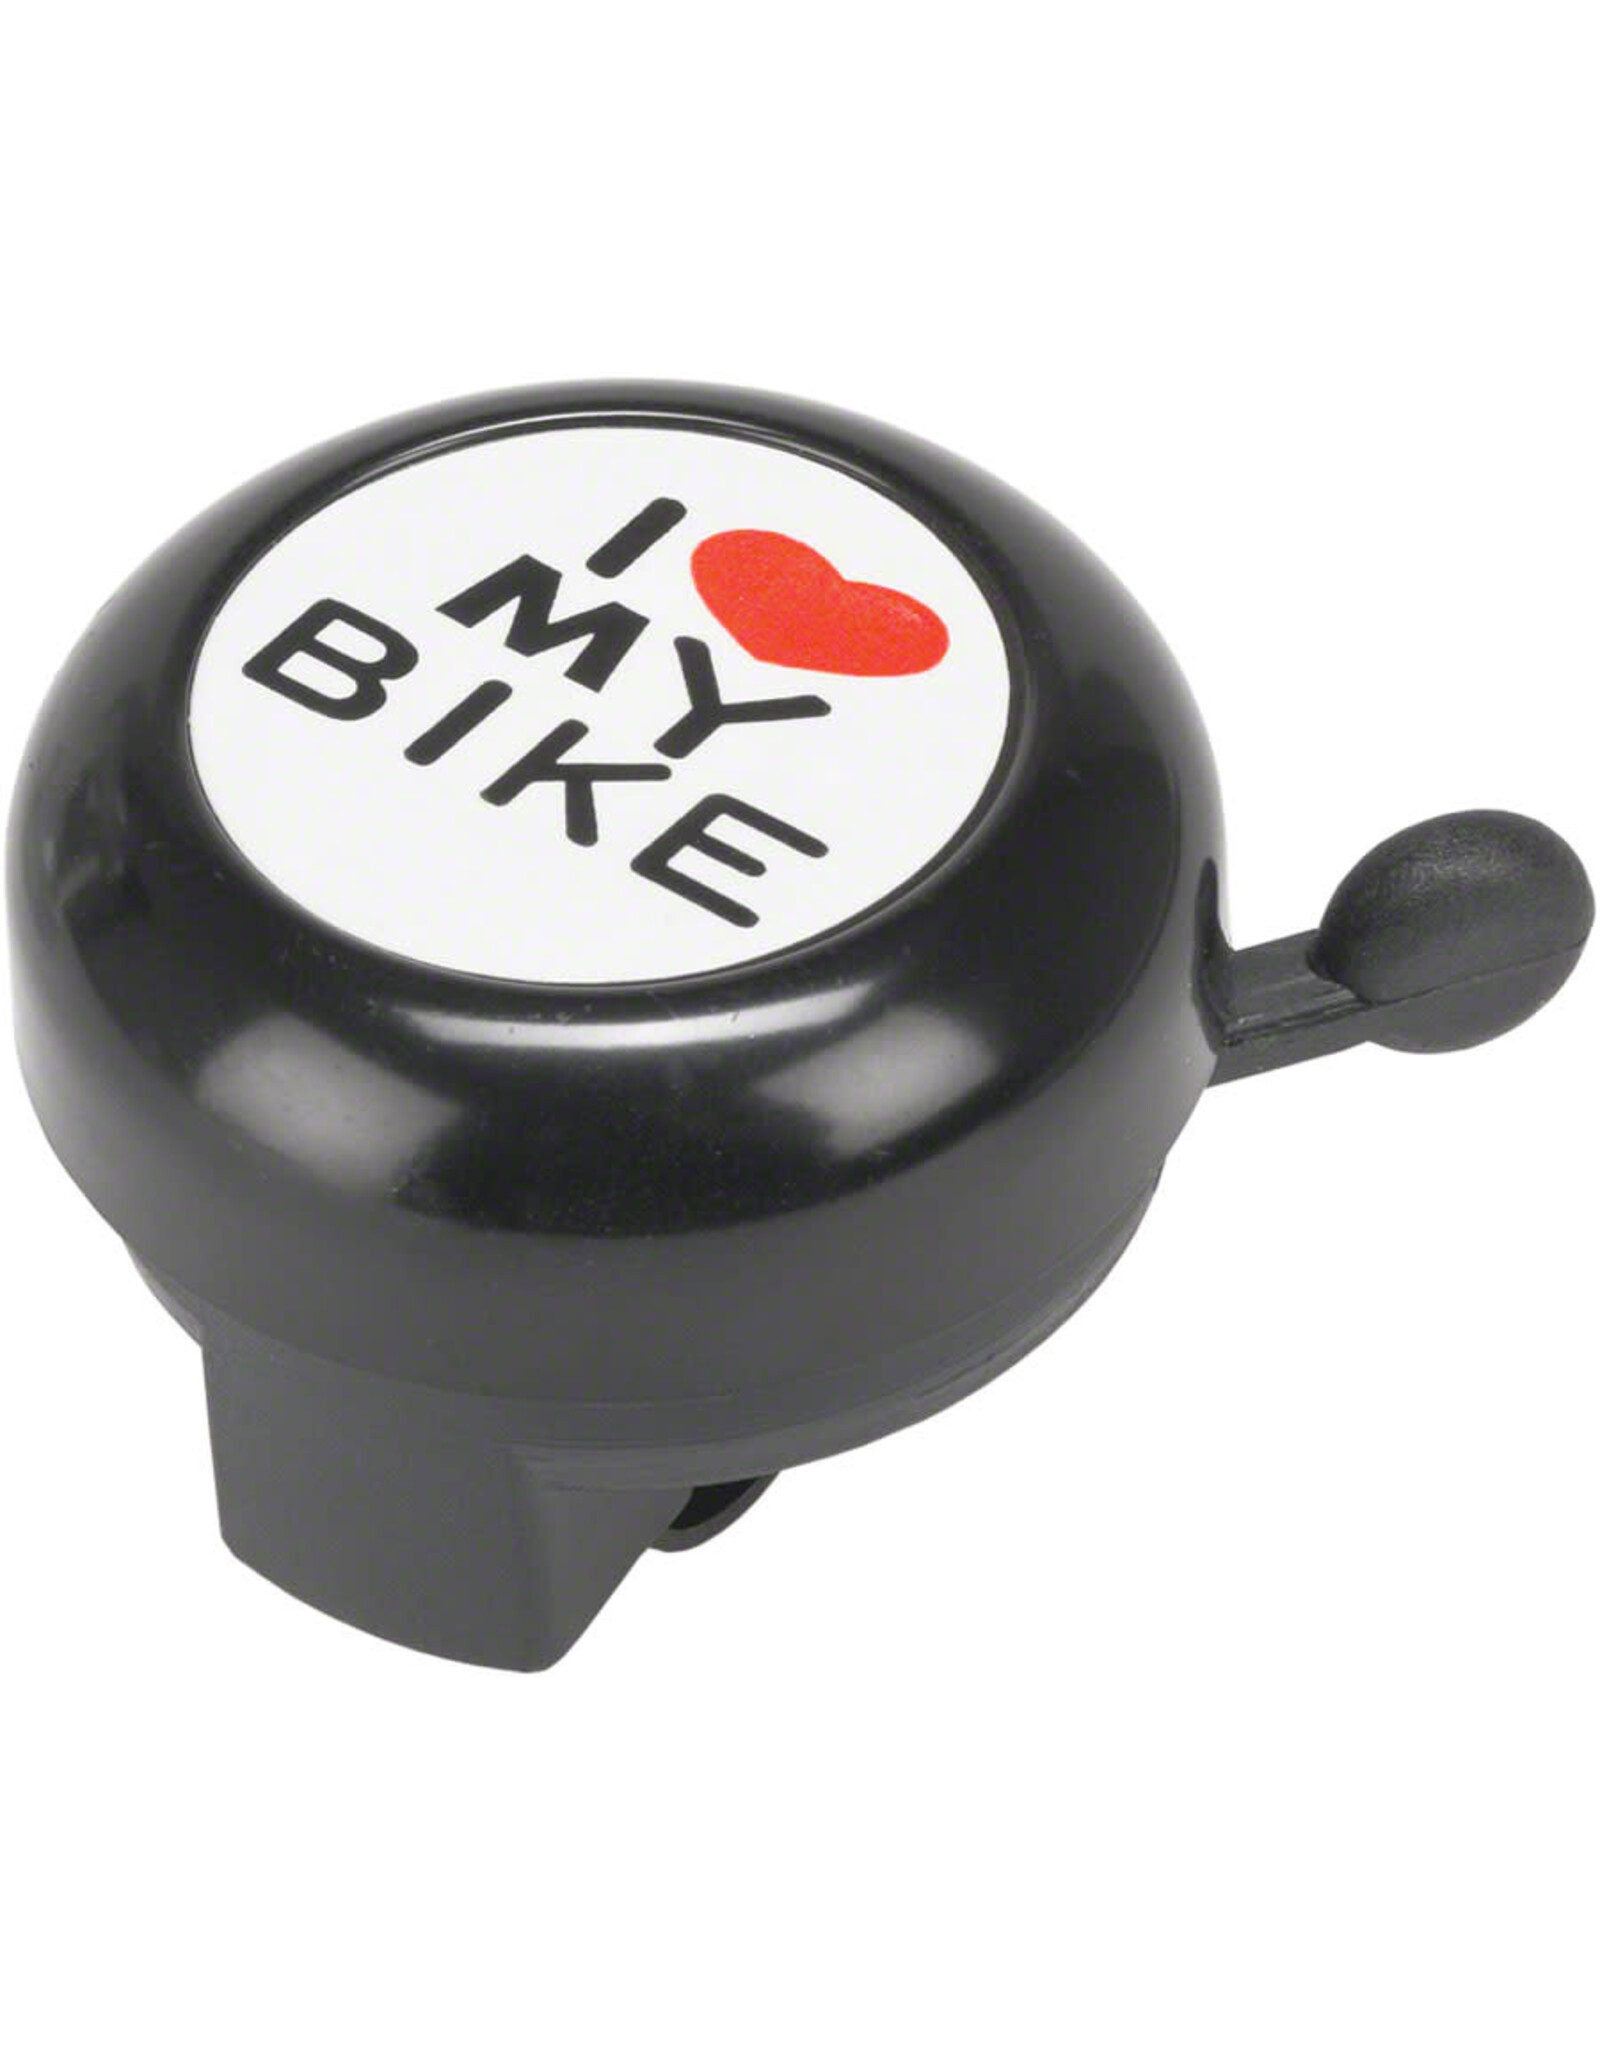 Dimension Dimension "I Heart My Bike" Black Bell